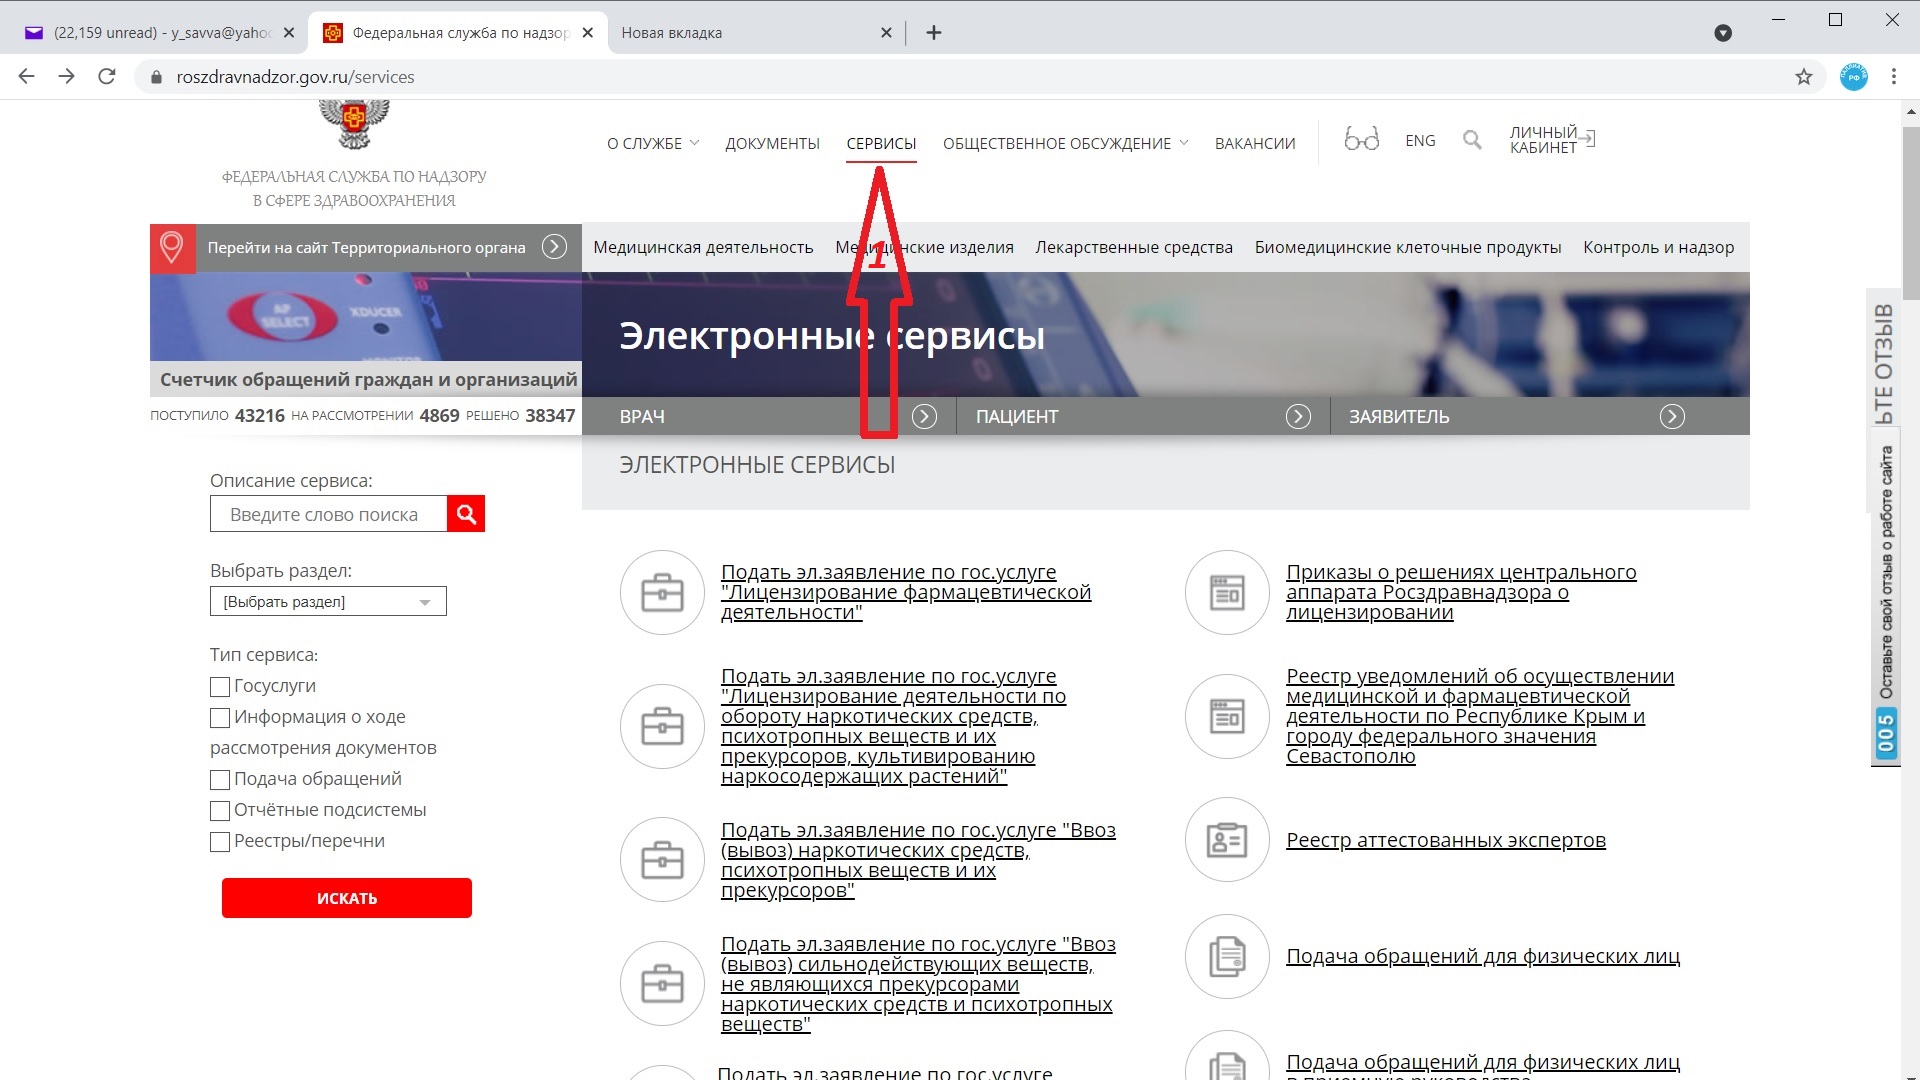 Roszdravnadzor gov ru licenses roszdravnadzor. Код медицинского изделия. Номенклатурная классификация медицинских изделий по видам.